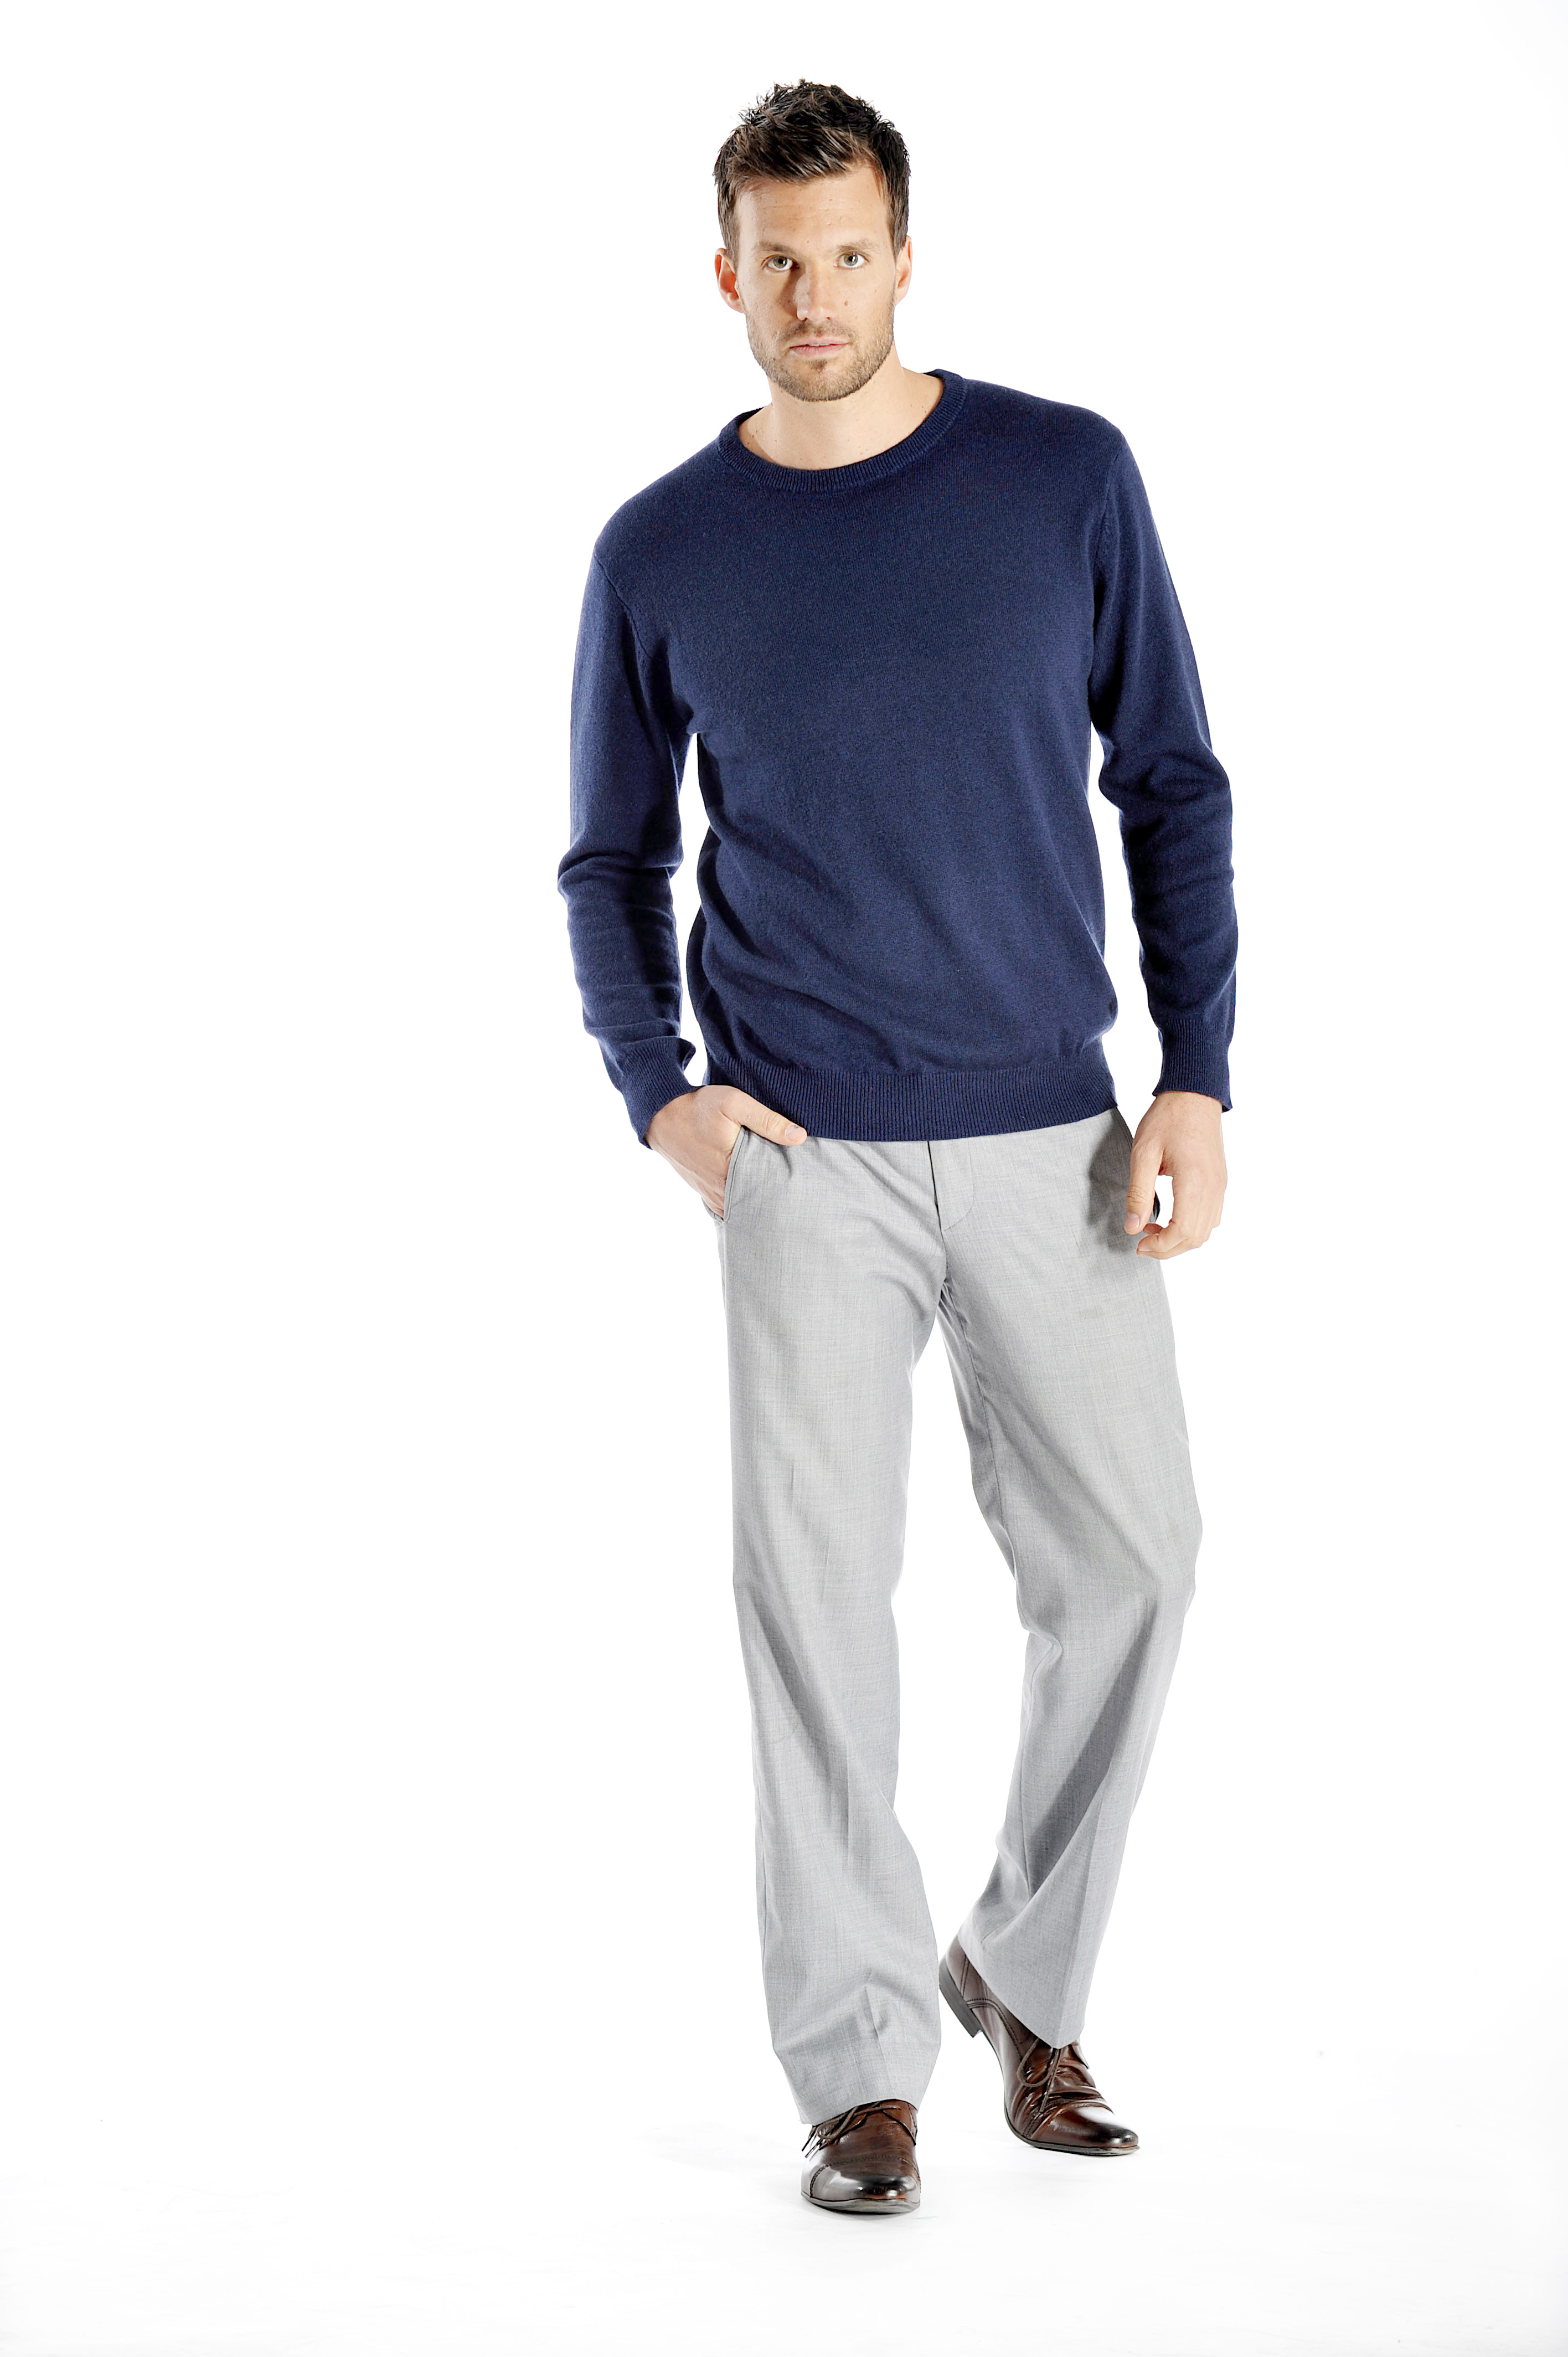 Men\'s Crew Neck Cashmere Sweater (Charcoal, Medium)